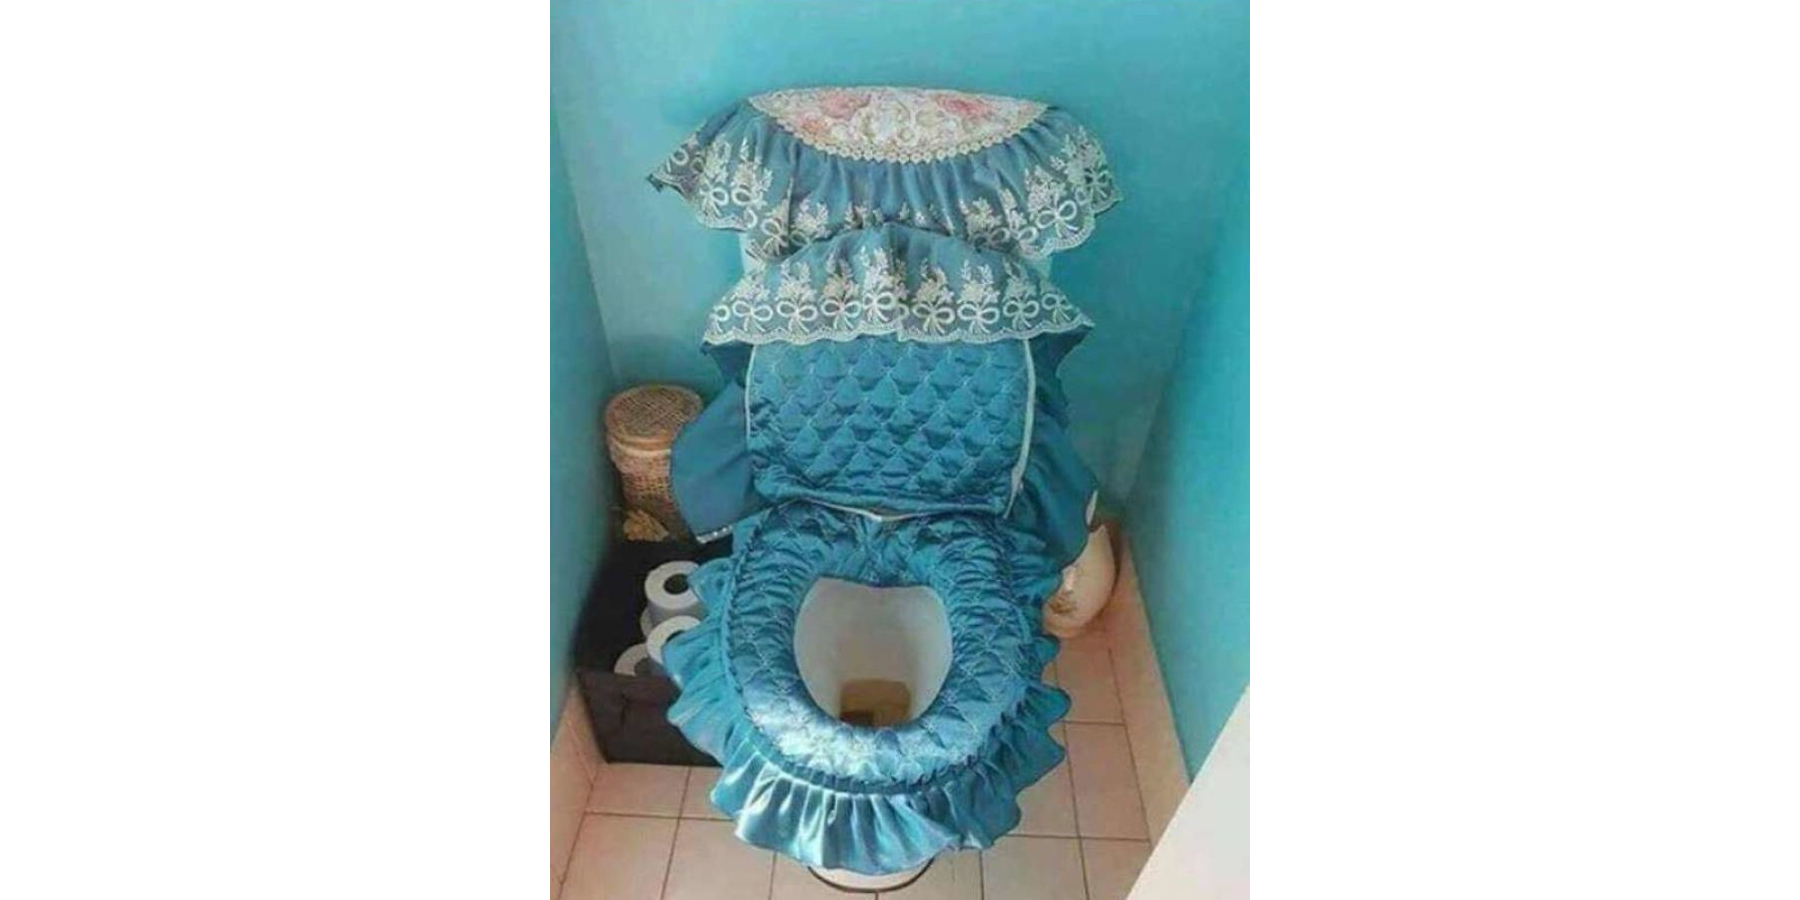 Princess toilet